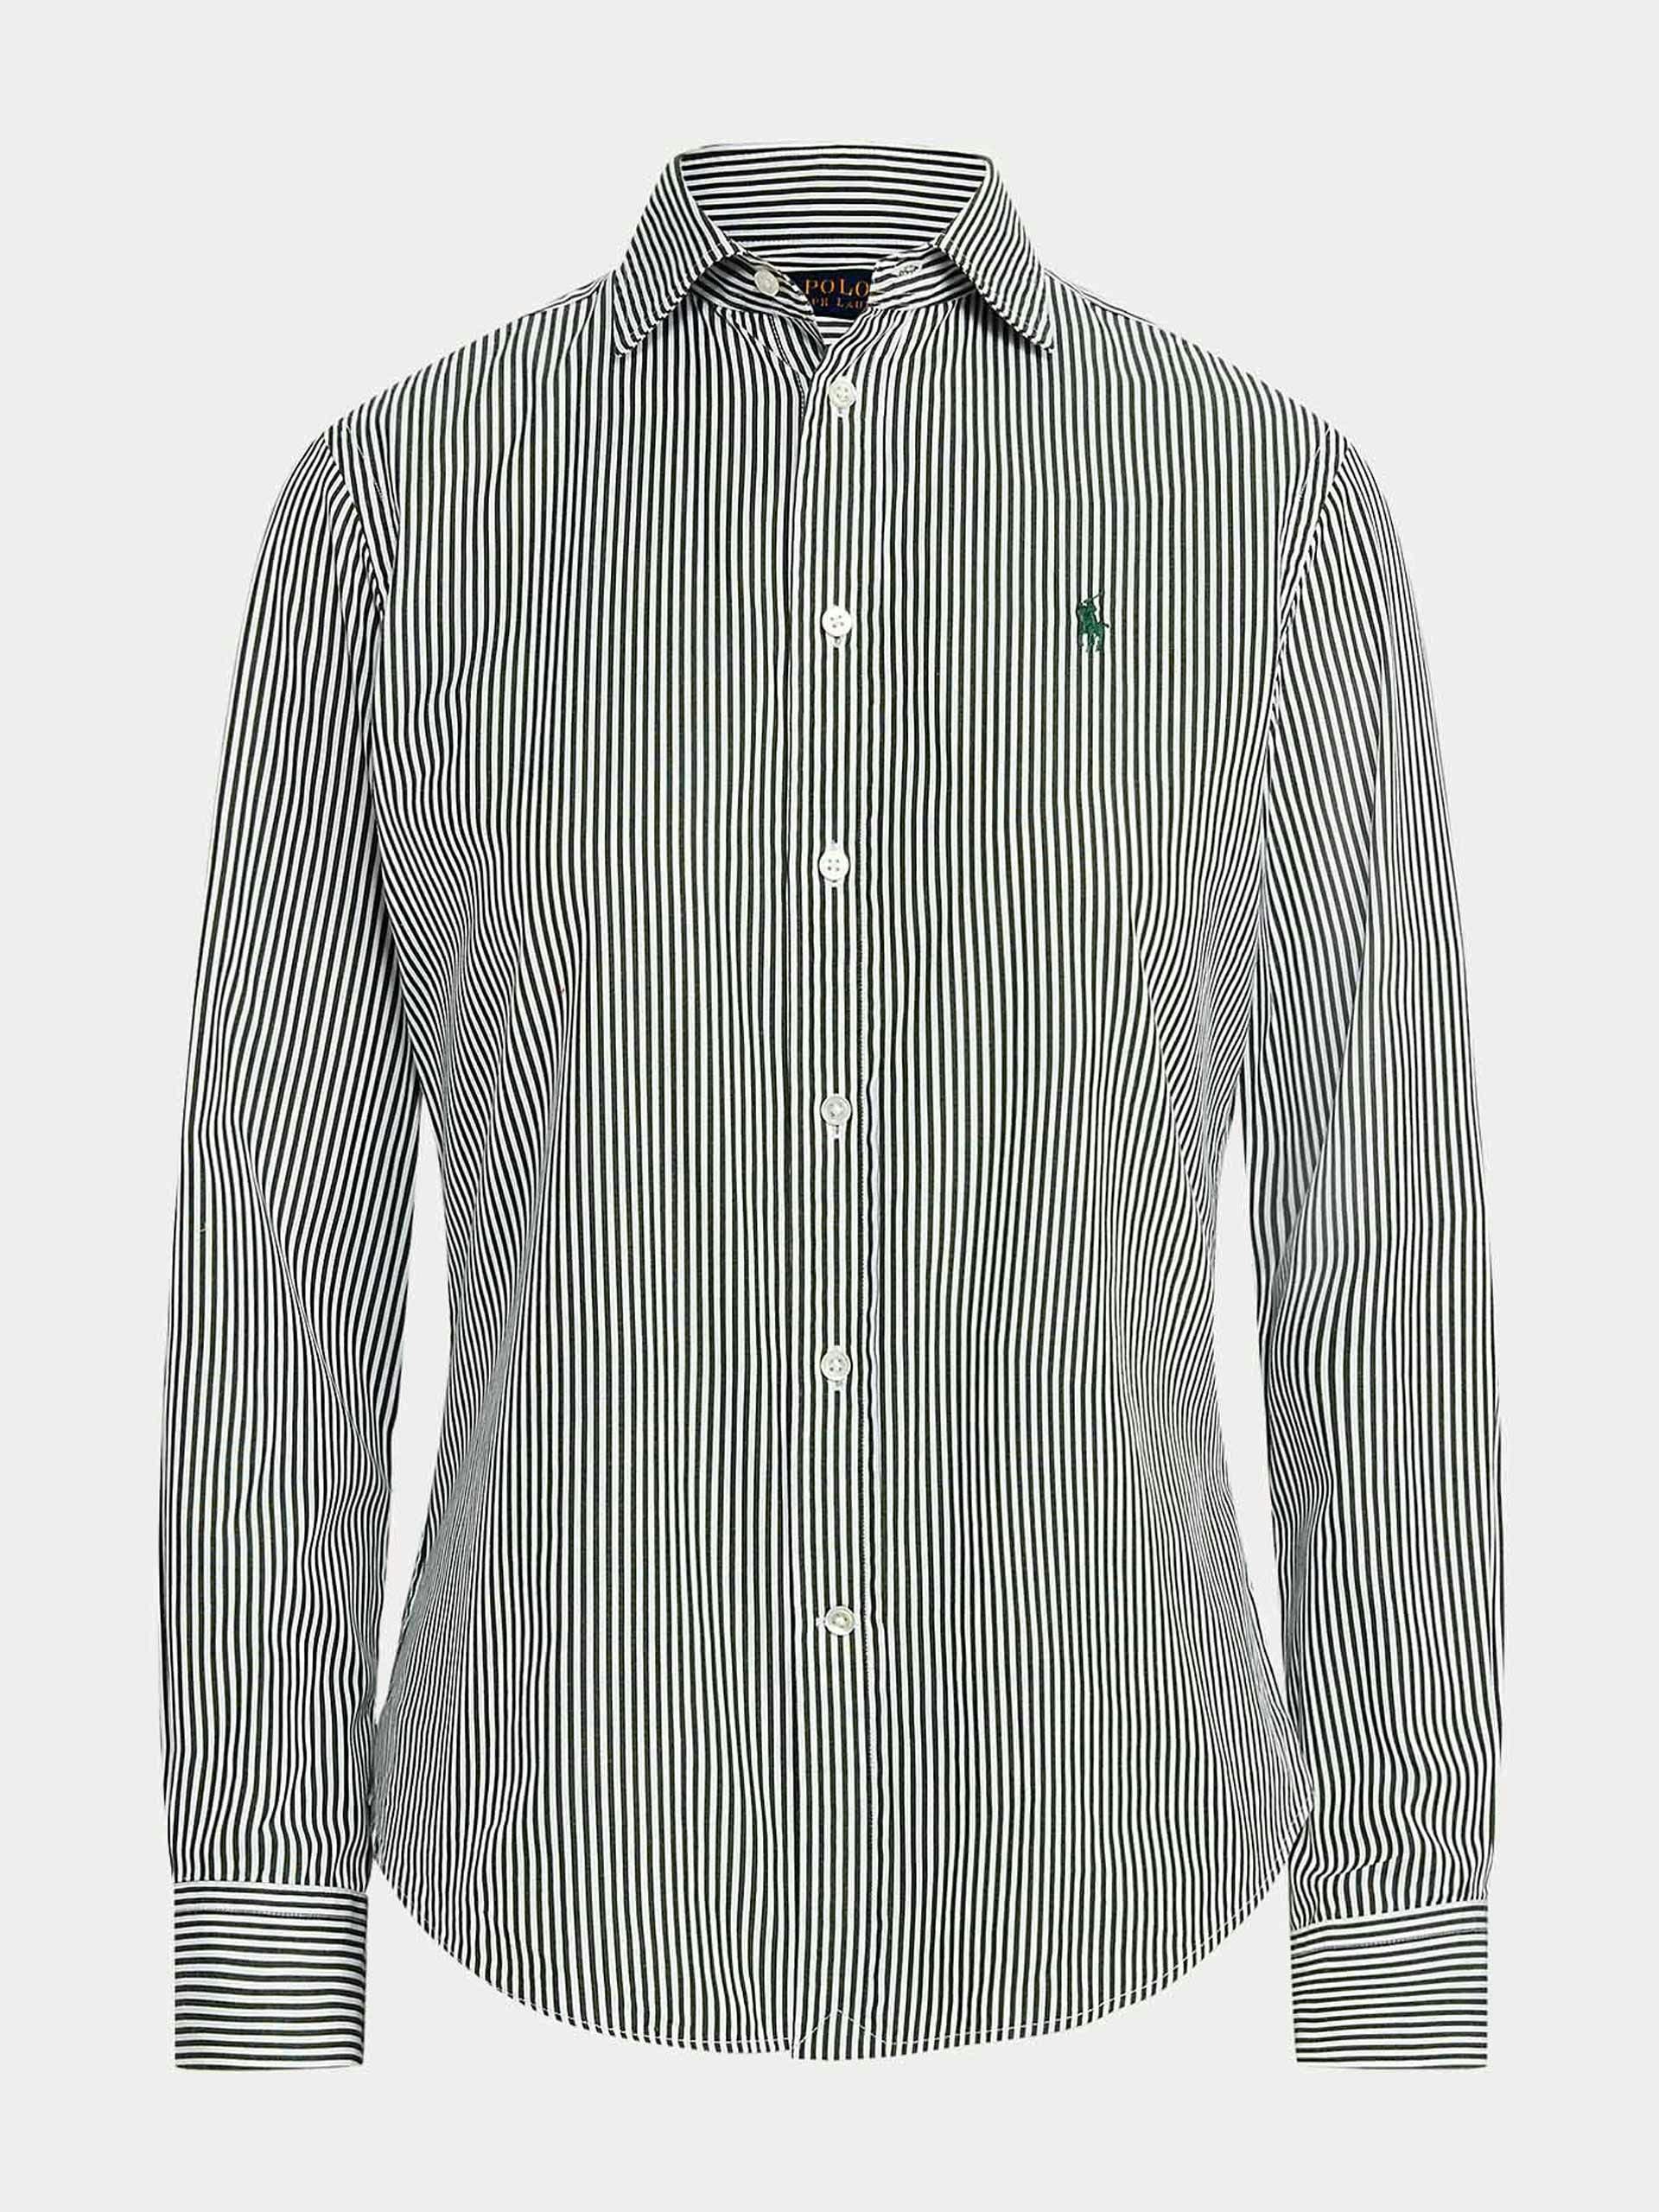 Classic fit striped cotton shirt